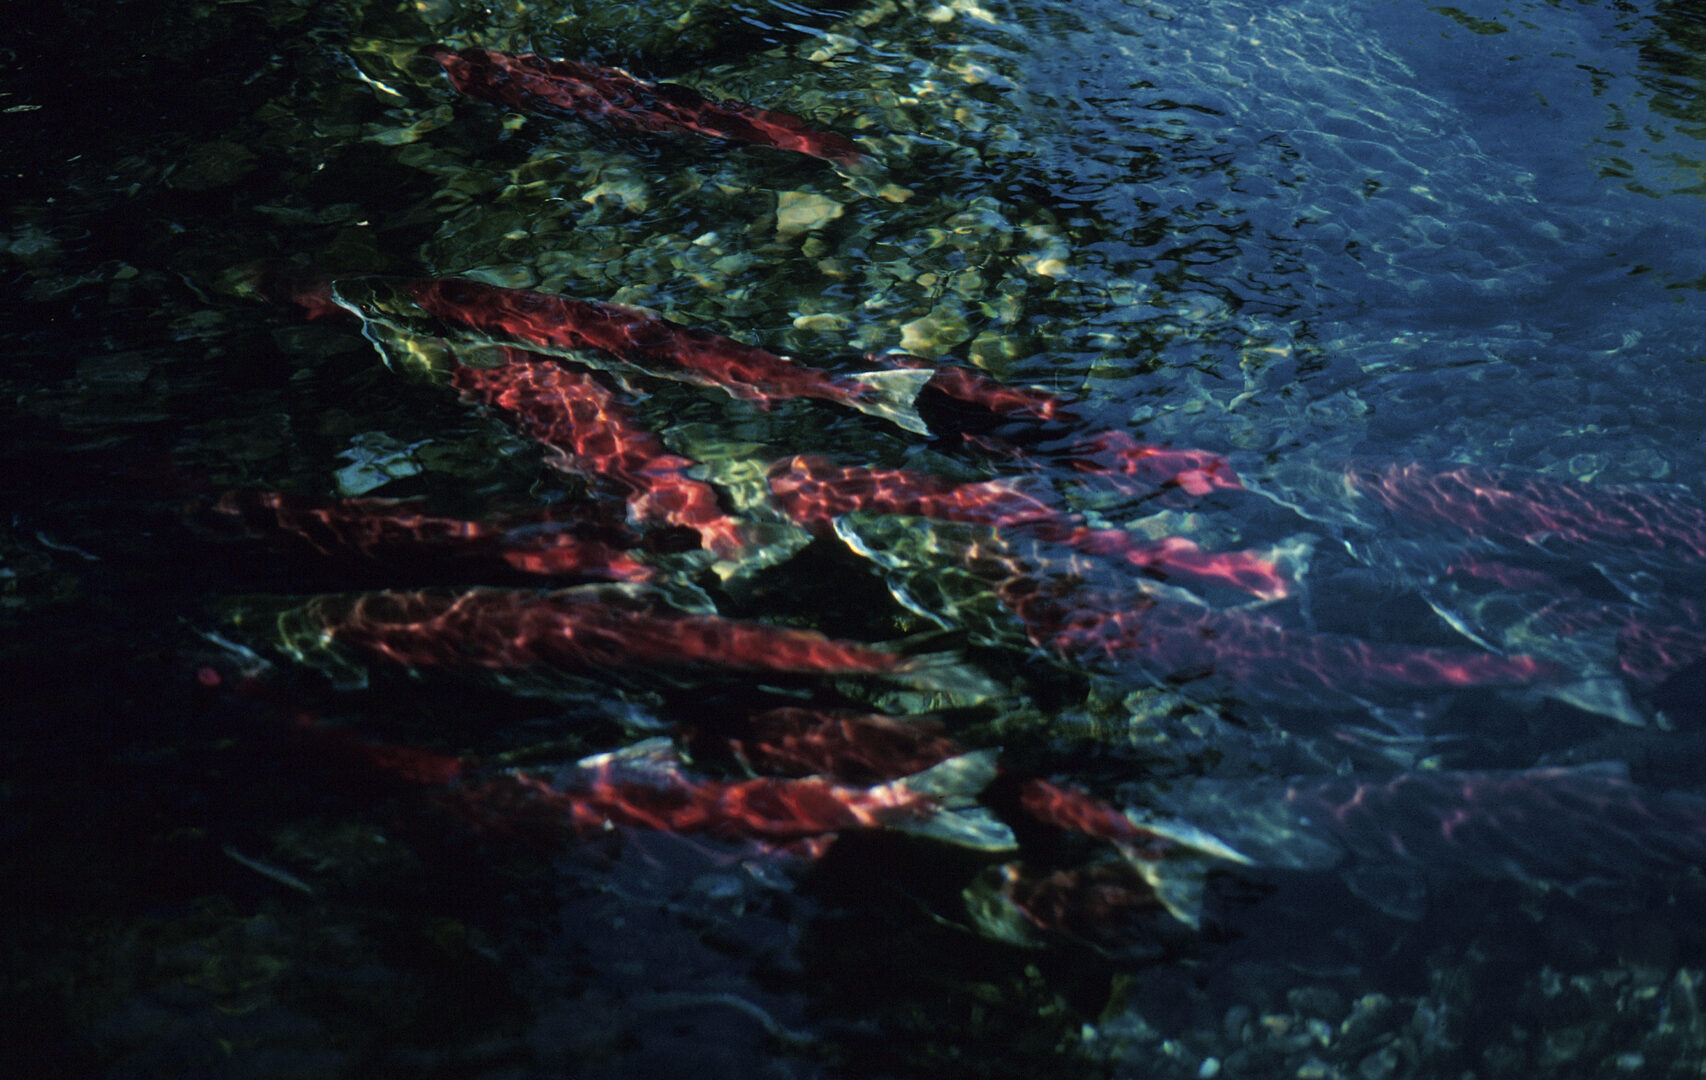 A school of wild salmon swim beneath dark water.